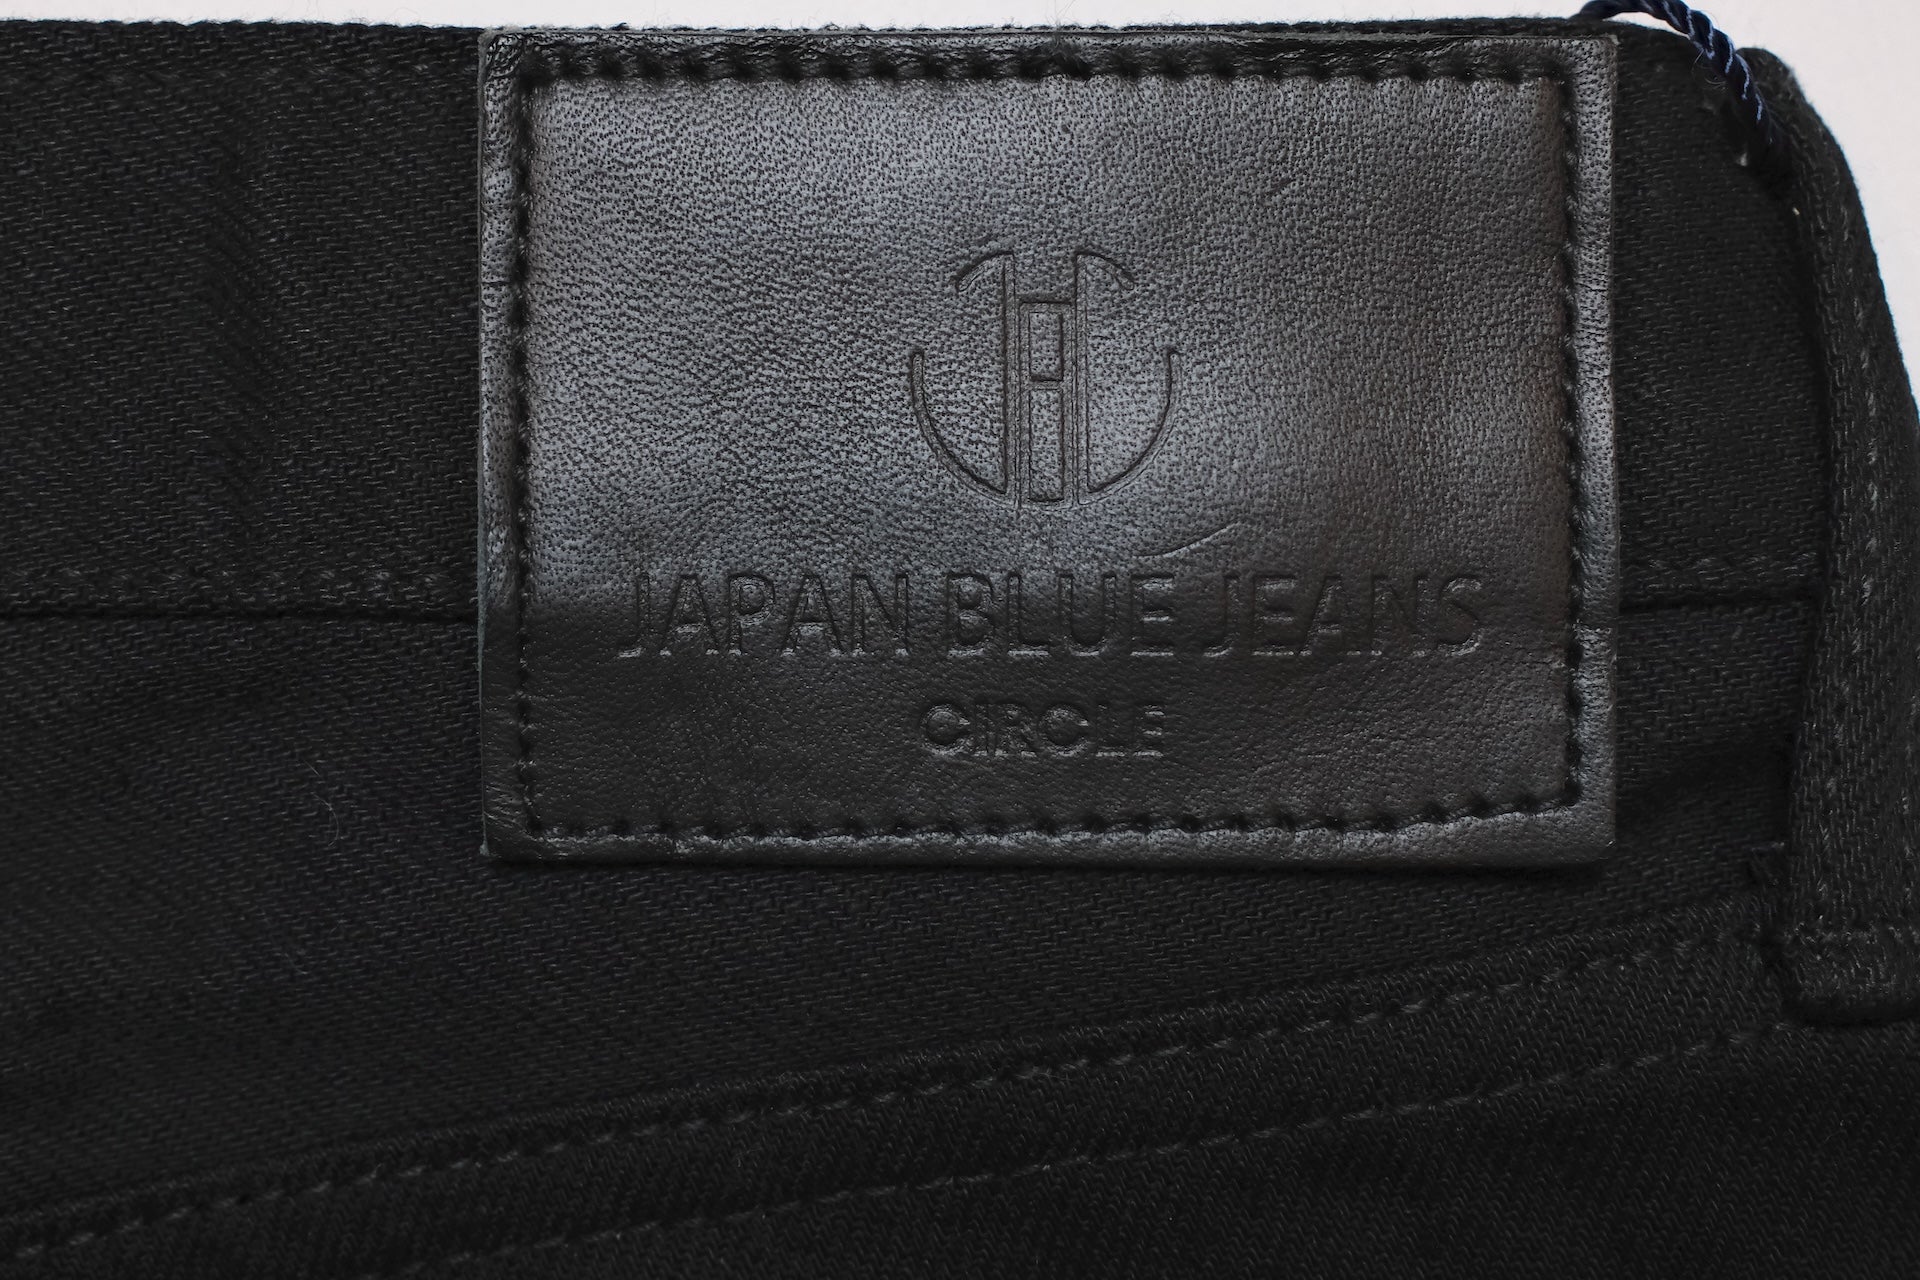 Japan Blue 14oz J414 Double Black 'Circle' Denim (Classic Straight Fit)